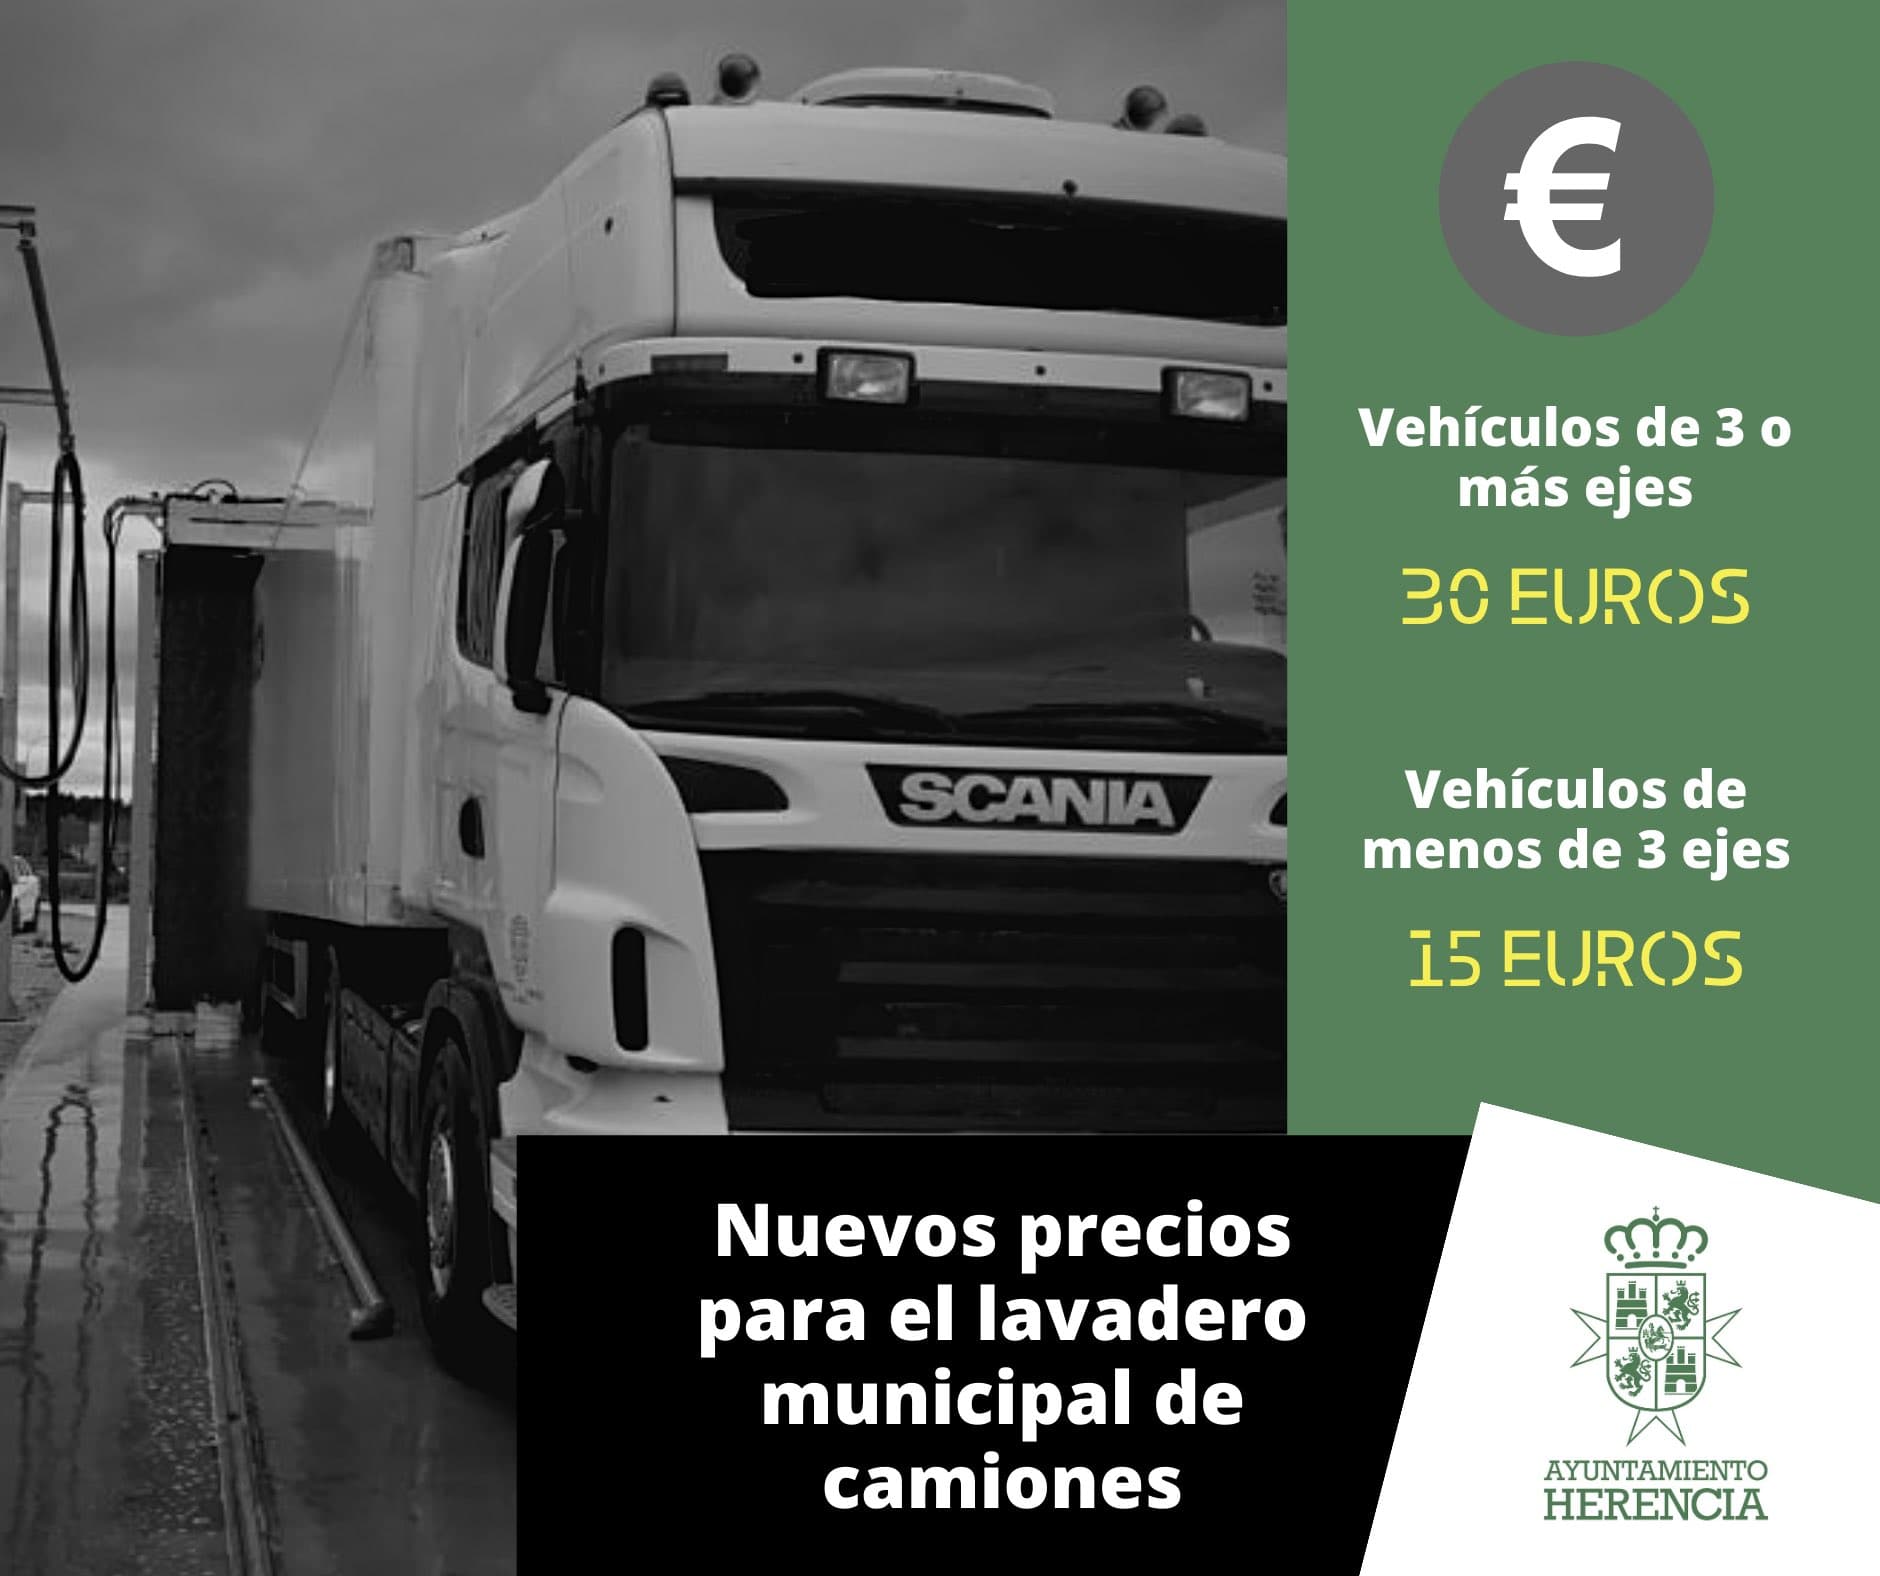 La tasa del lavadero municipal de camiones en Herencia actualizada a la baja 3